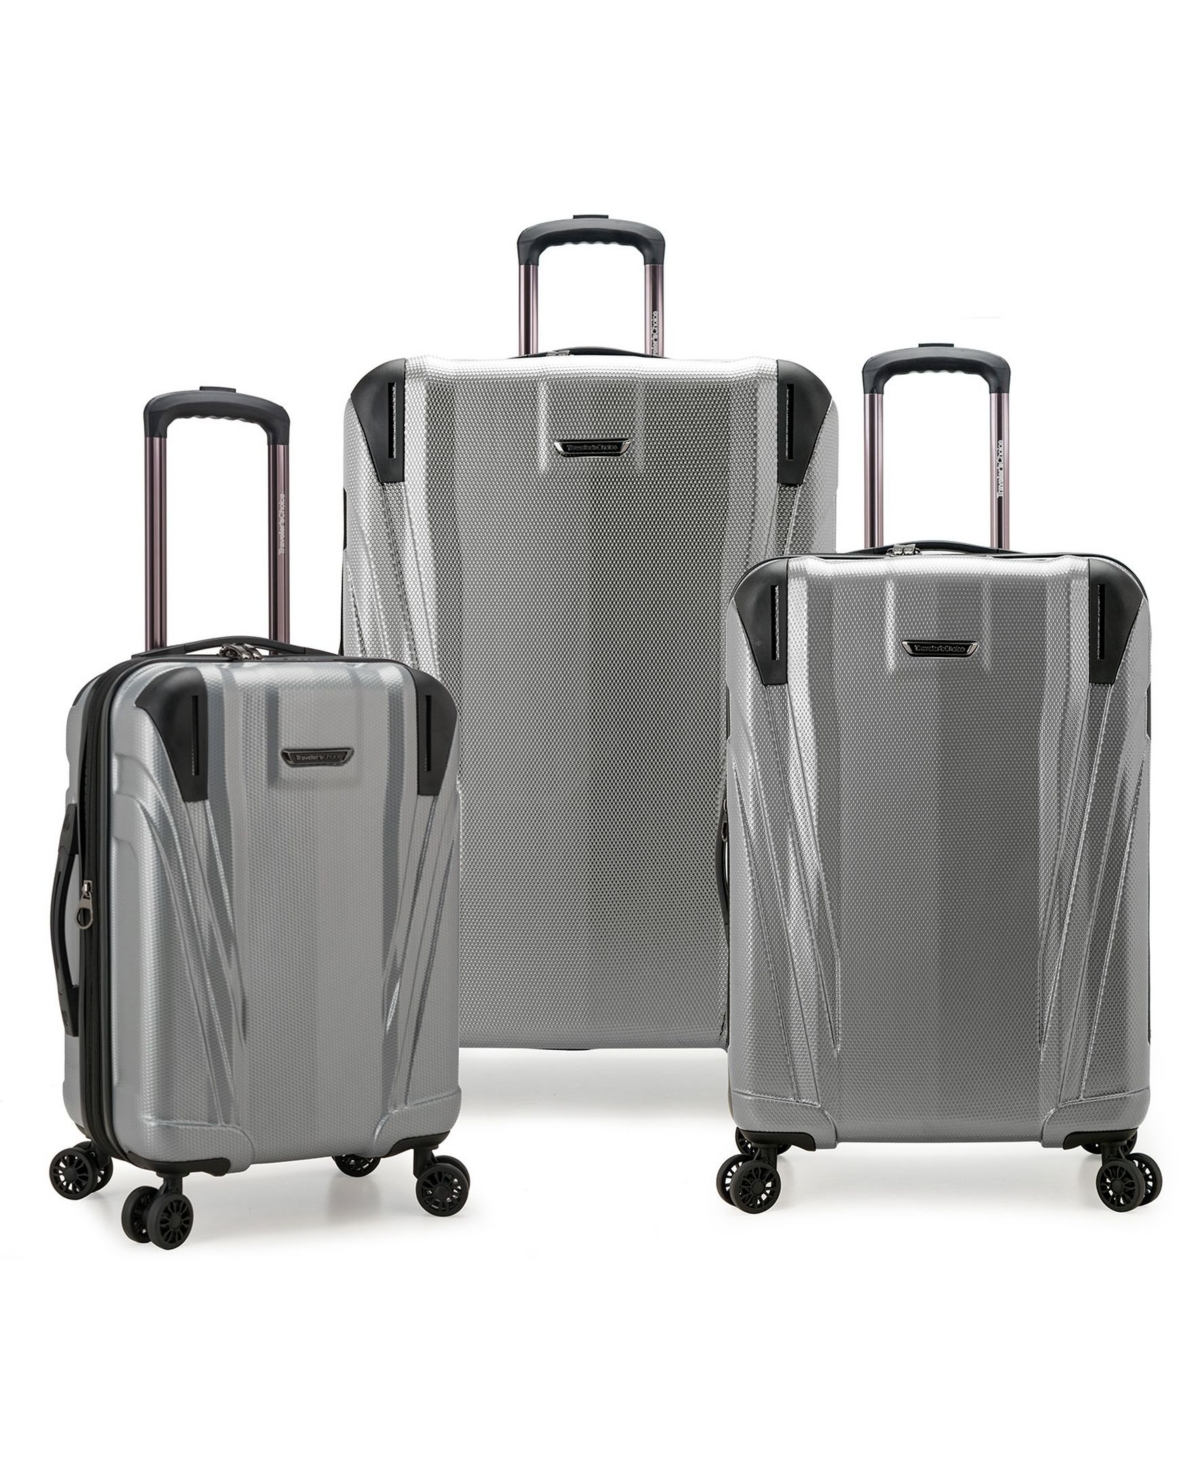 Valley Glen Hardside 3 Piece Luggage Set - Gray